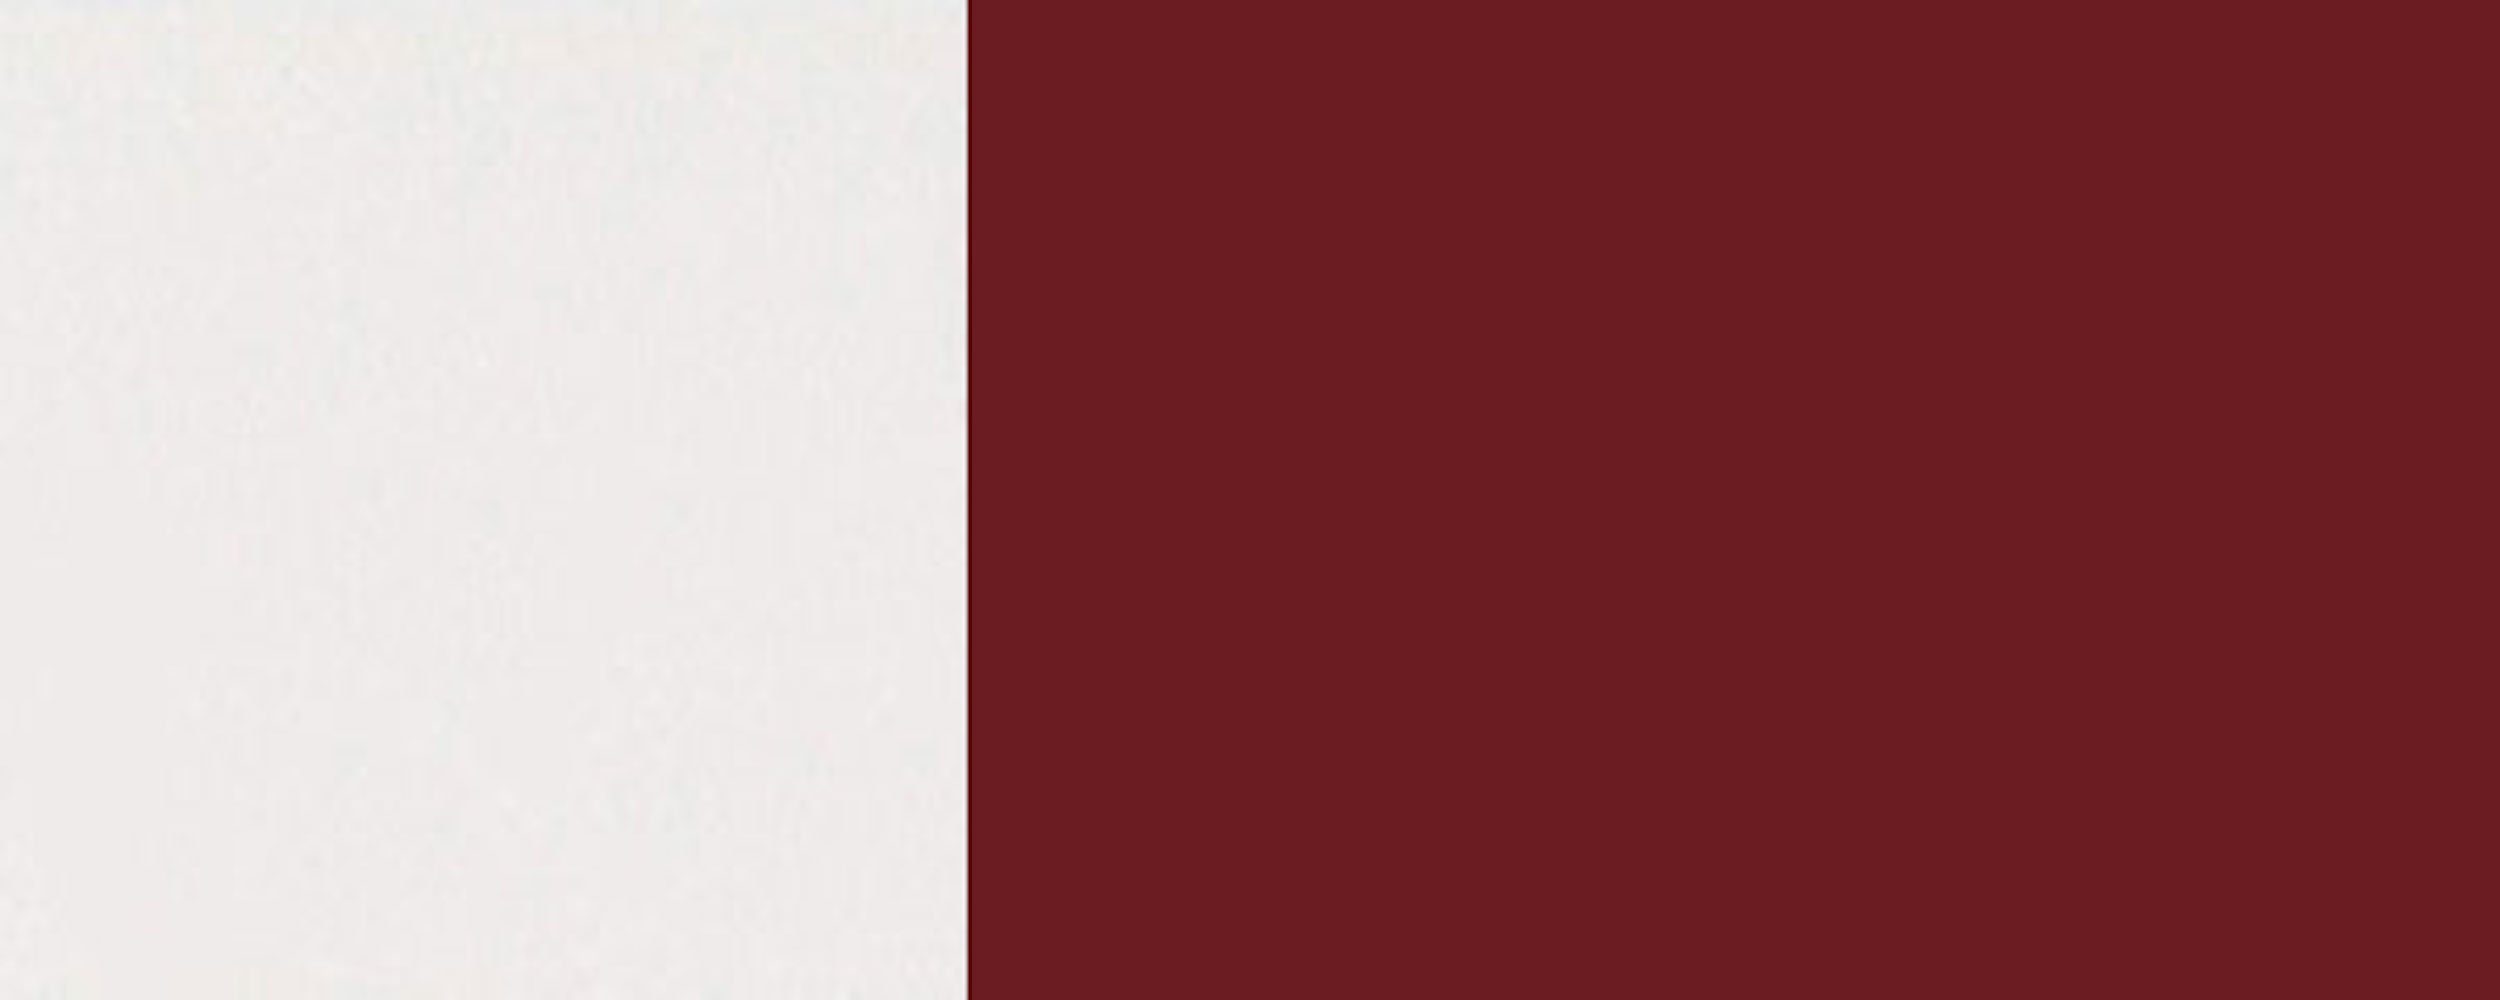 mit Rimini purpurrot Front- und Glaseinsatz matt Korpusfarbe Klapphängeschrank 3004 RAL (Rimini) 90cm Feldmann-Wohnen 1-türig wählbar